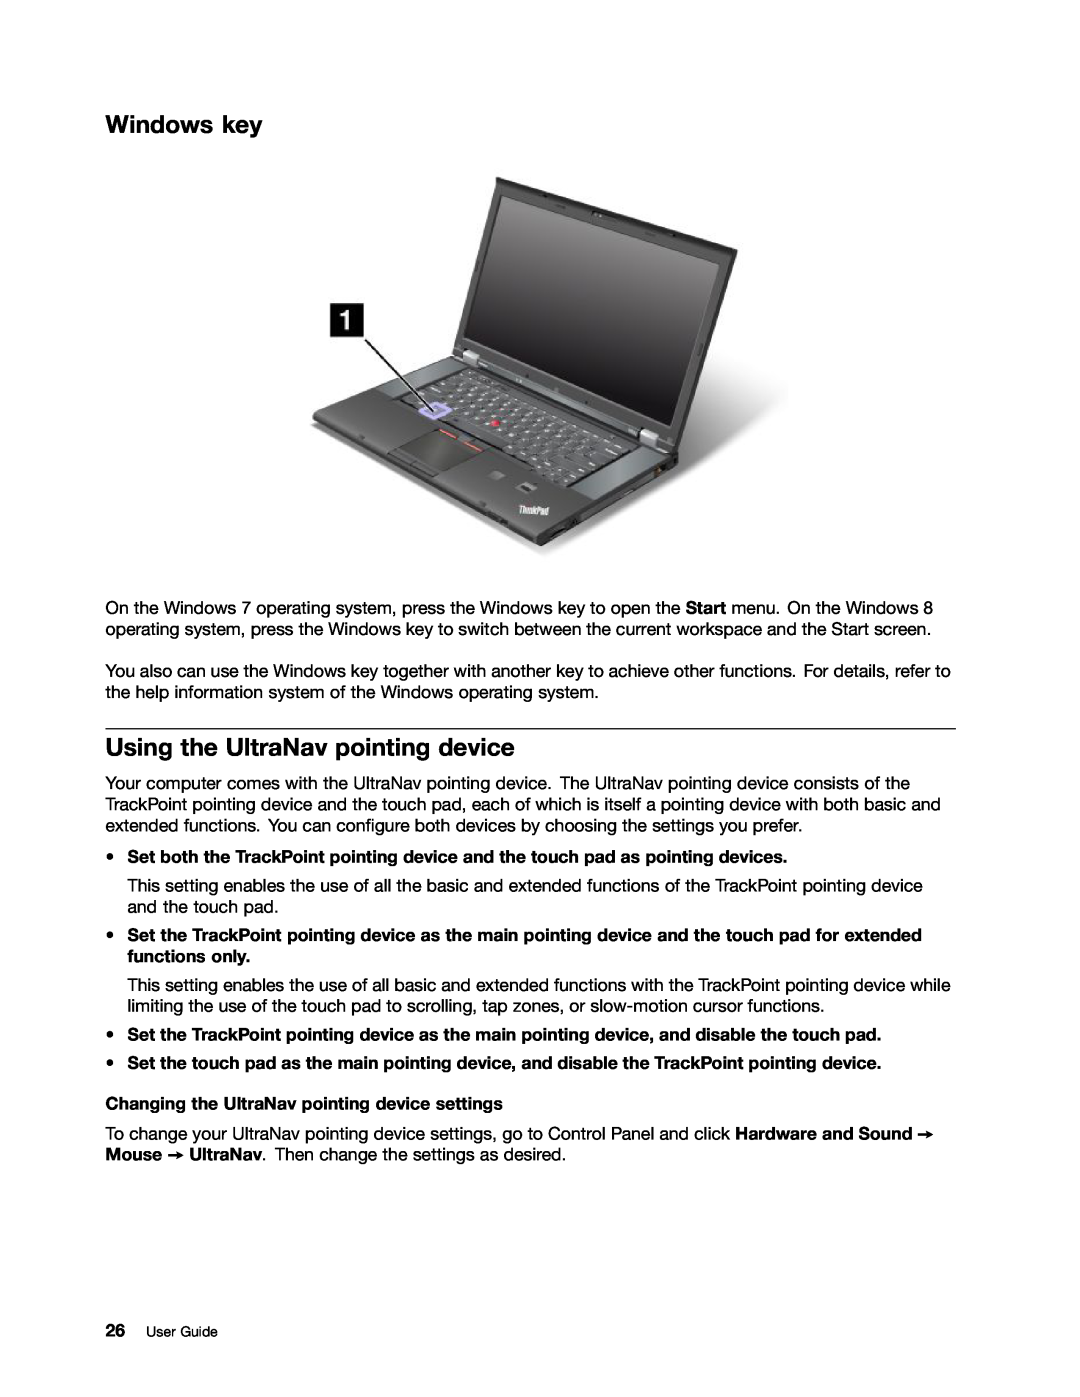 Lenovo W530, T530i manual Windows key, Using the UltraNav pointing device, Changing the UltraNav pointing device settings 